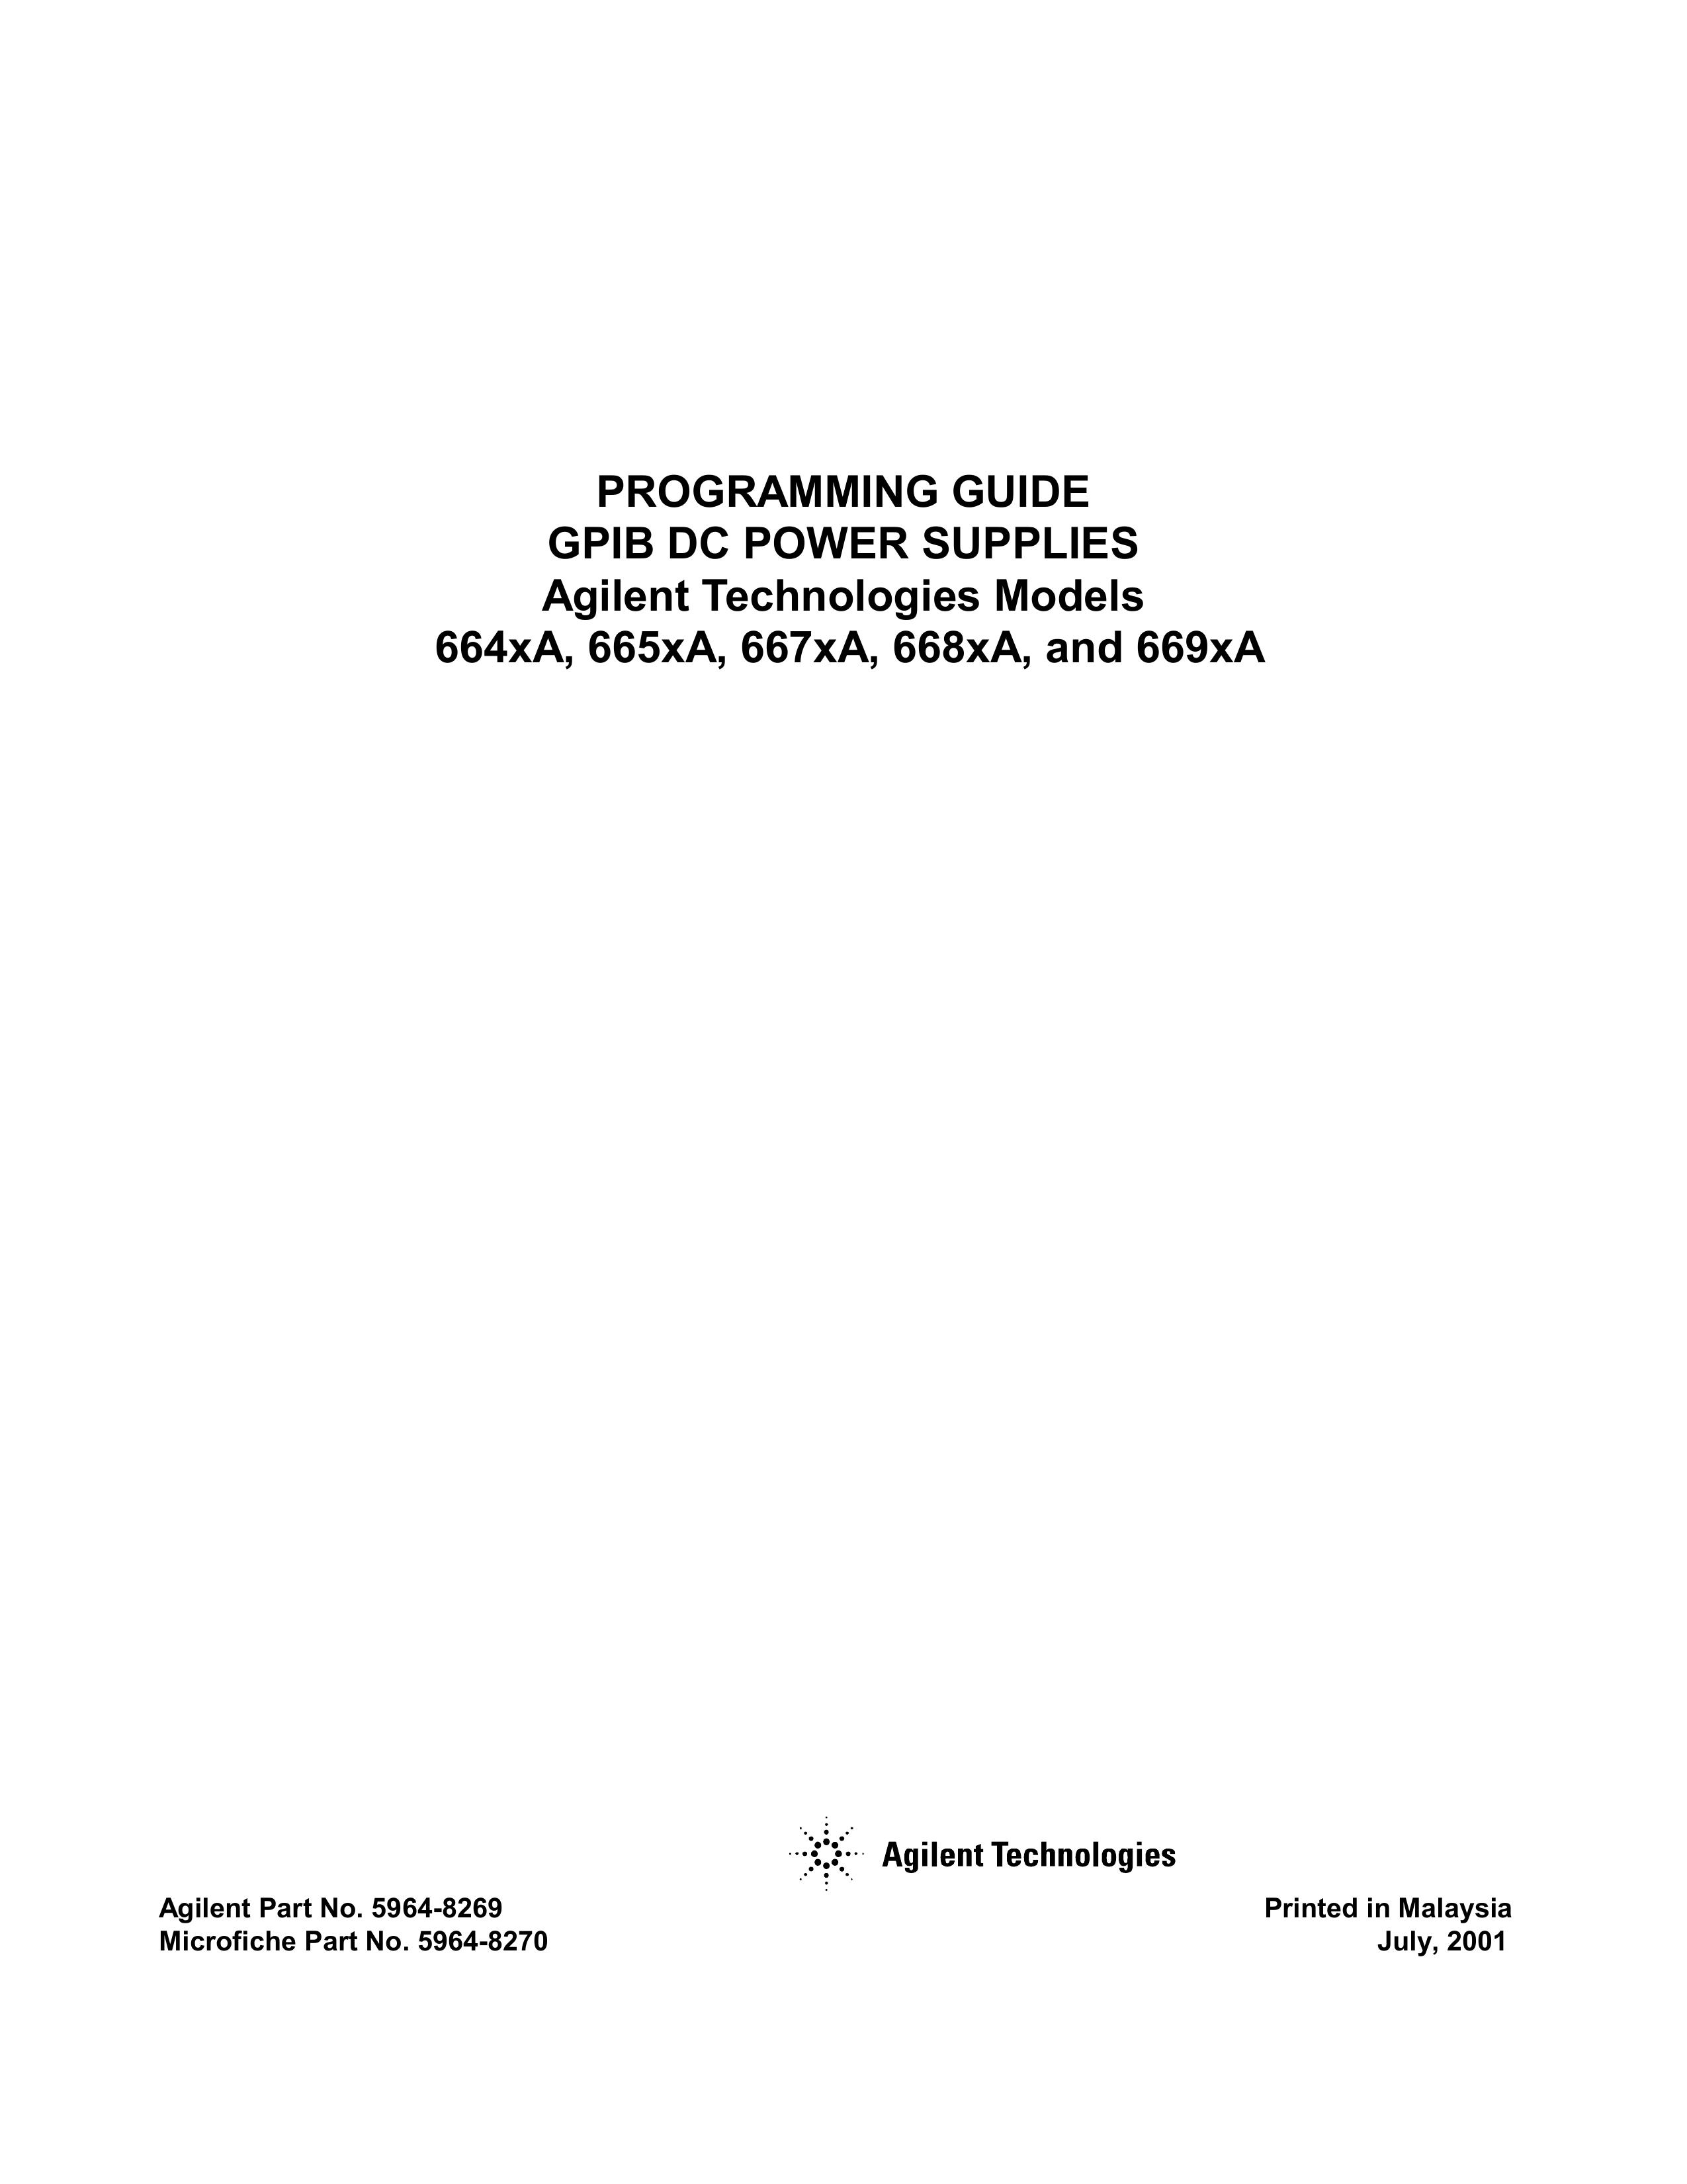 Agilent Technologies 667xA Portable Generator User Manual